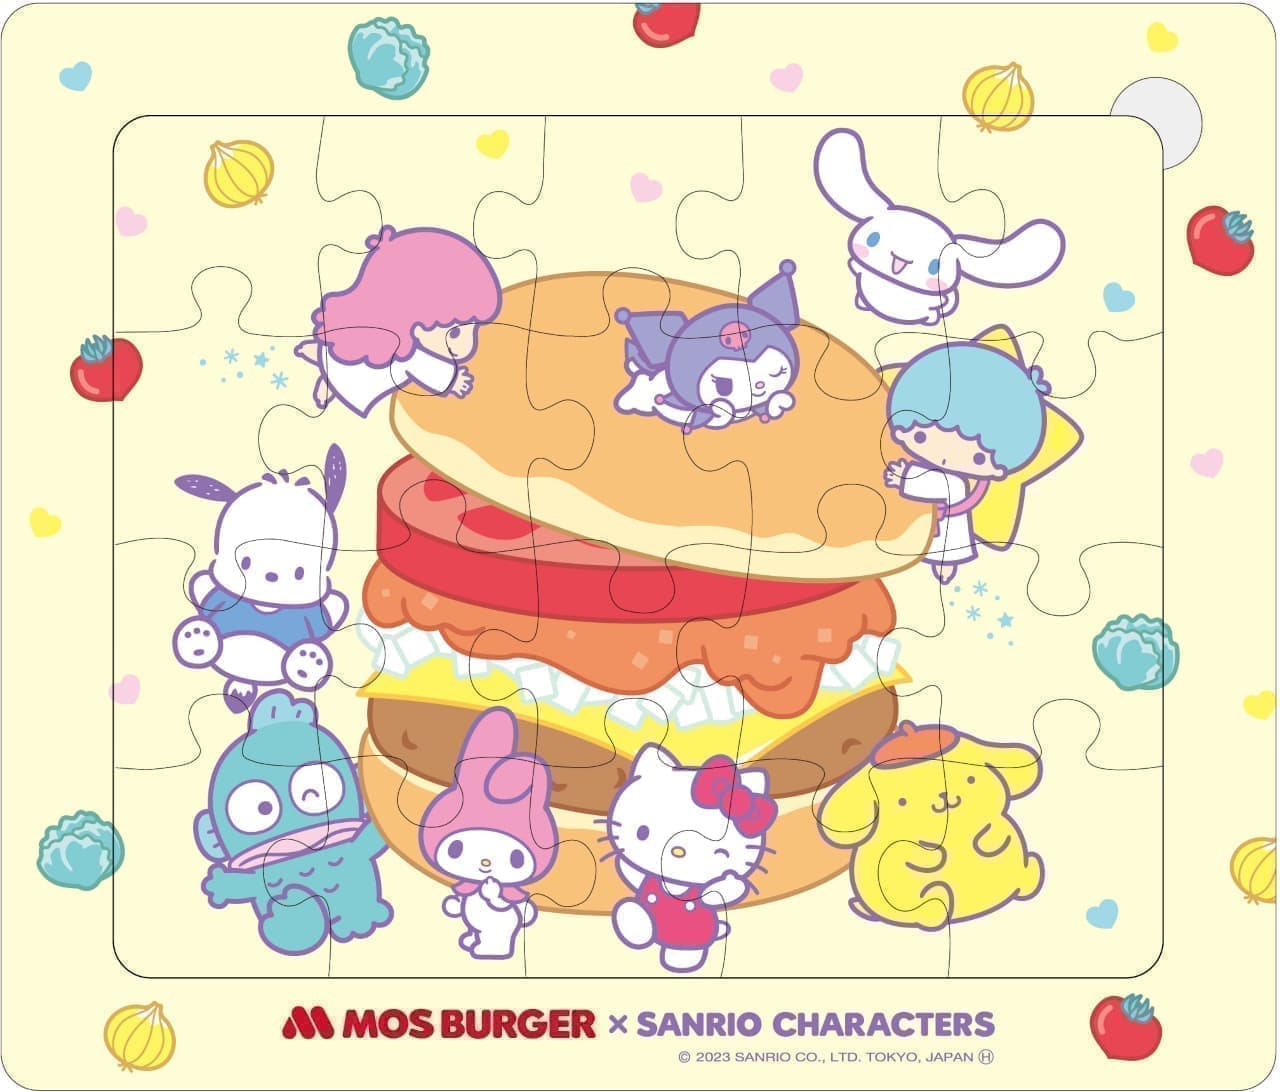 Mos Burger "Sanrio Characters" Collaboration Toy Original Puzzle